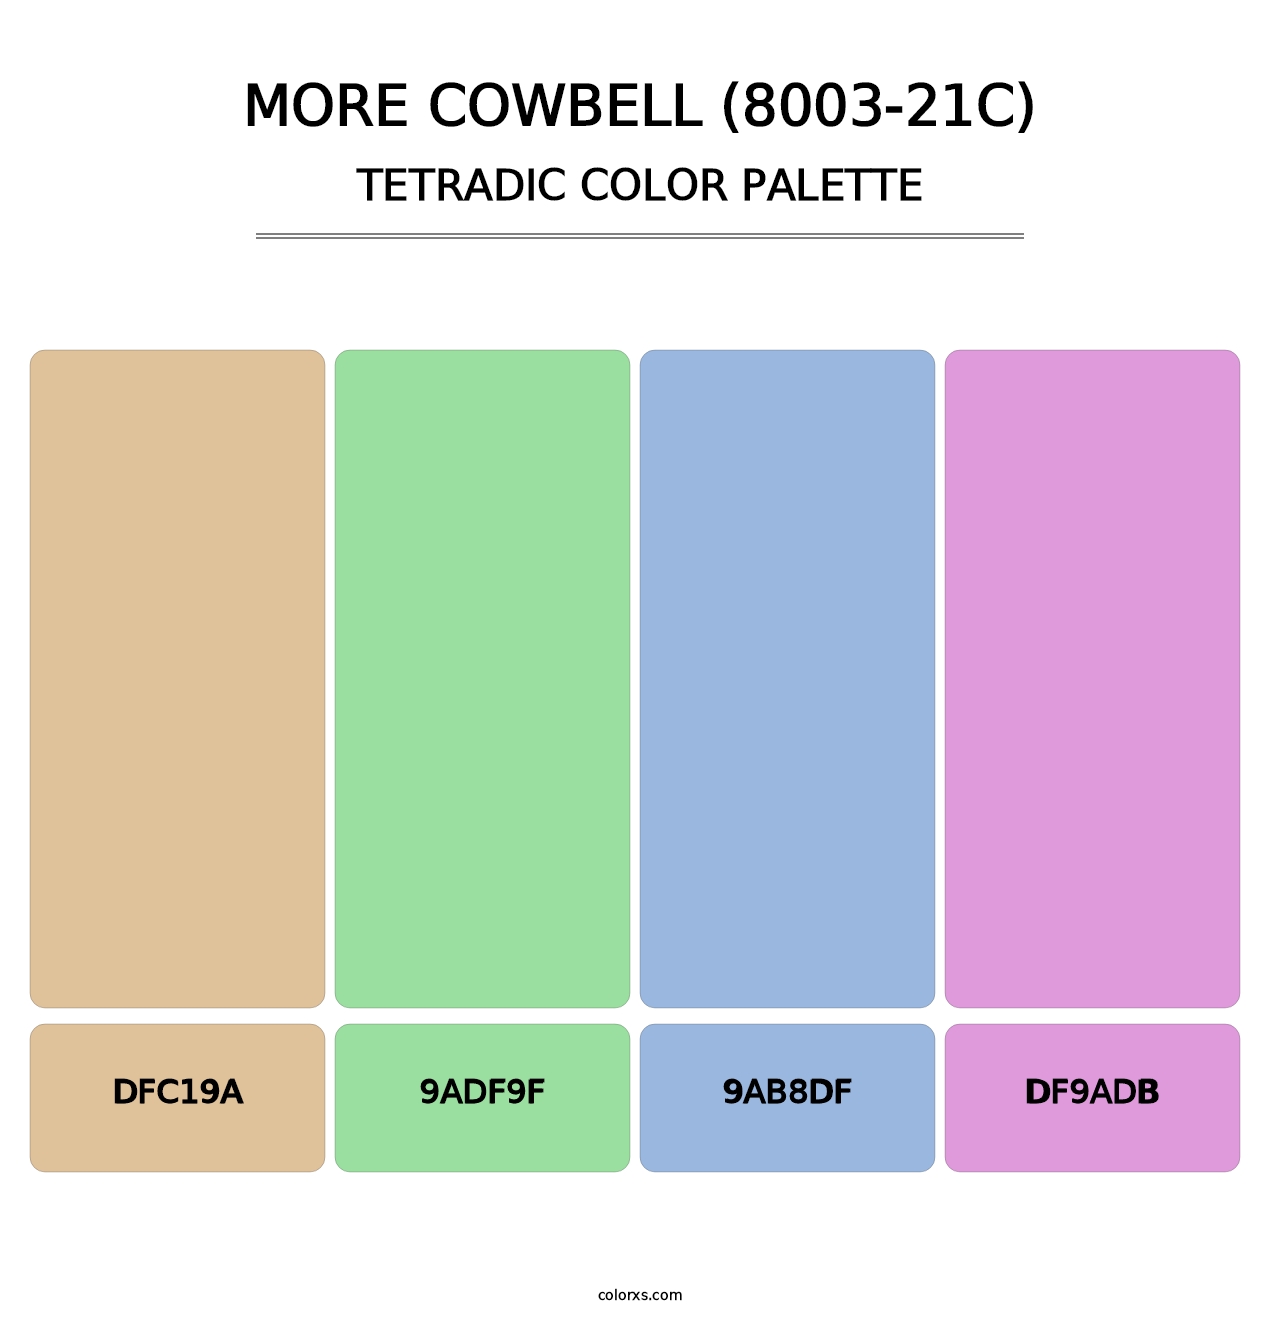 More Cowbell (8003-21C) - Tetradic Color Palette